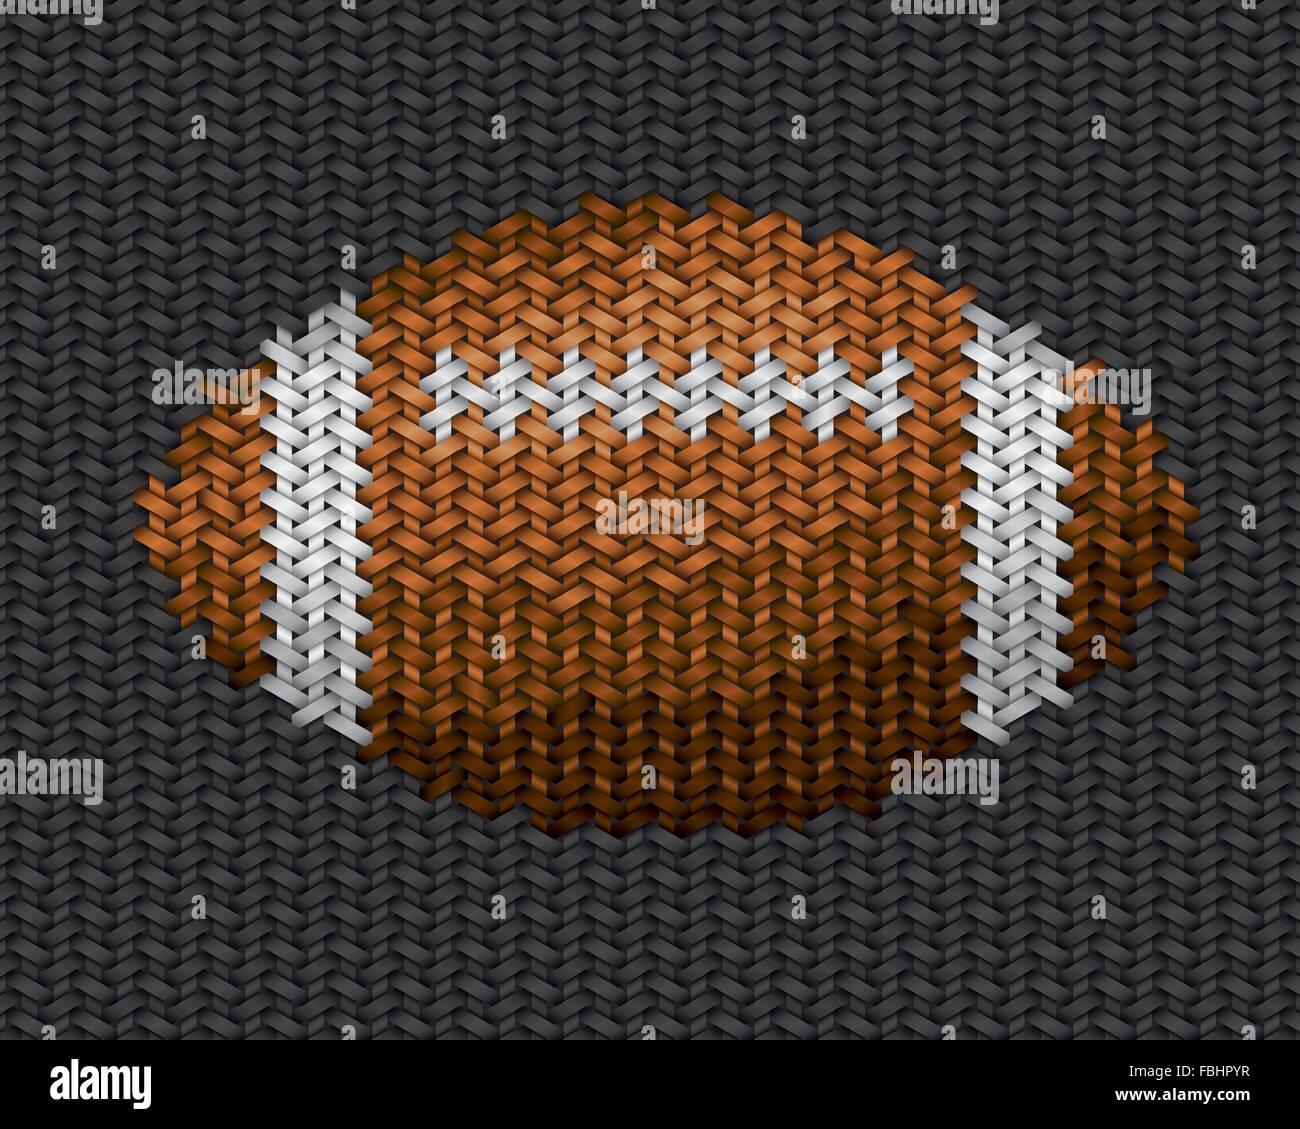 american football ball embroidery handwork on fabric Stock Vector